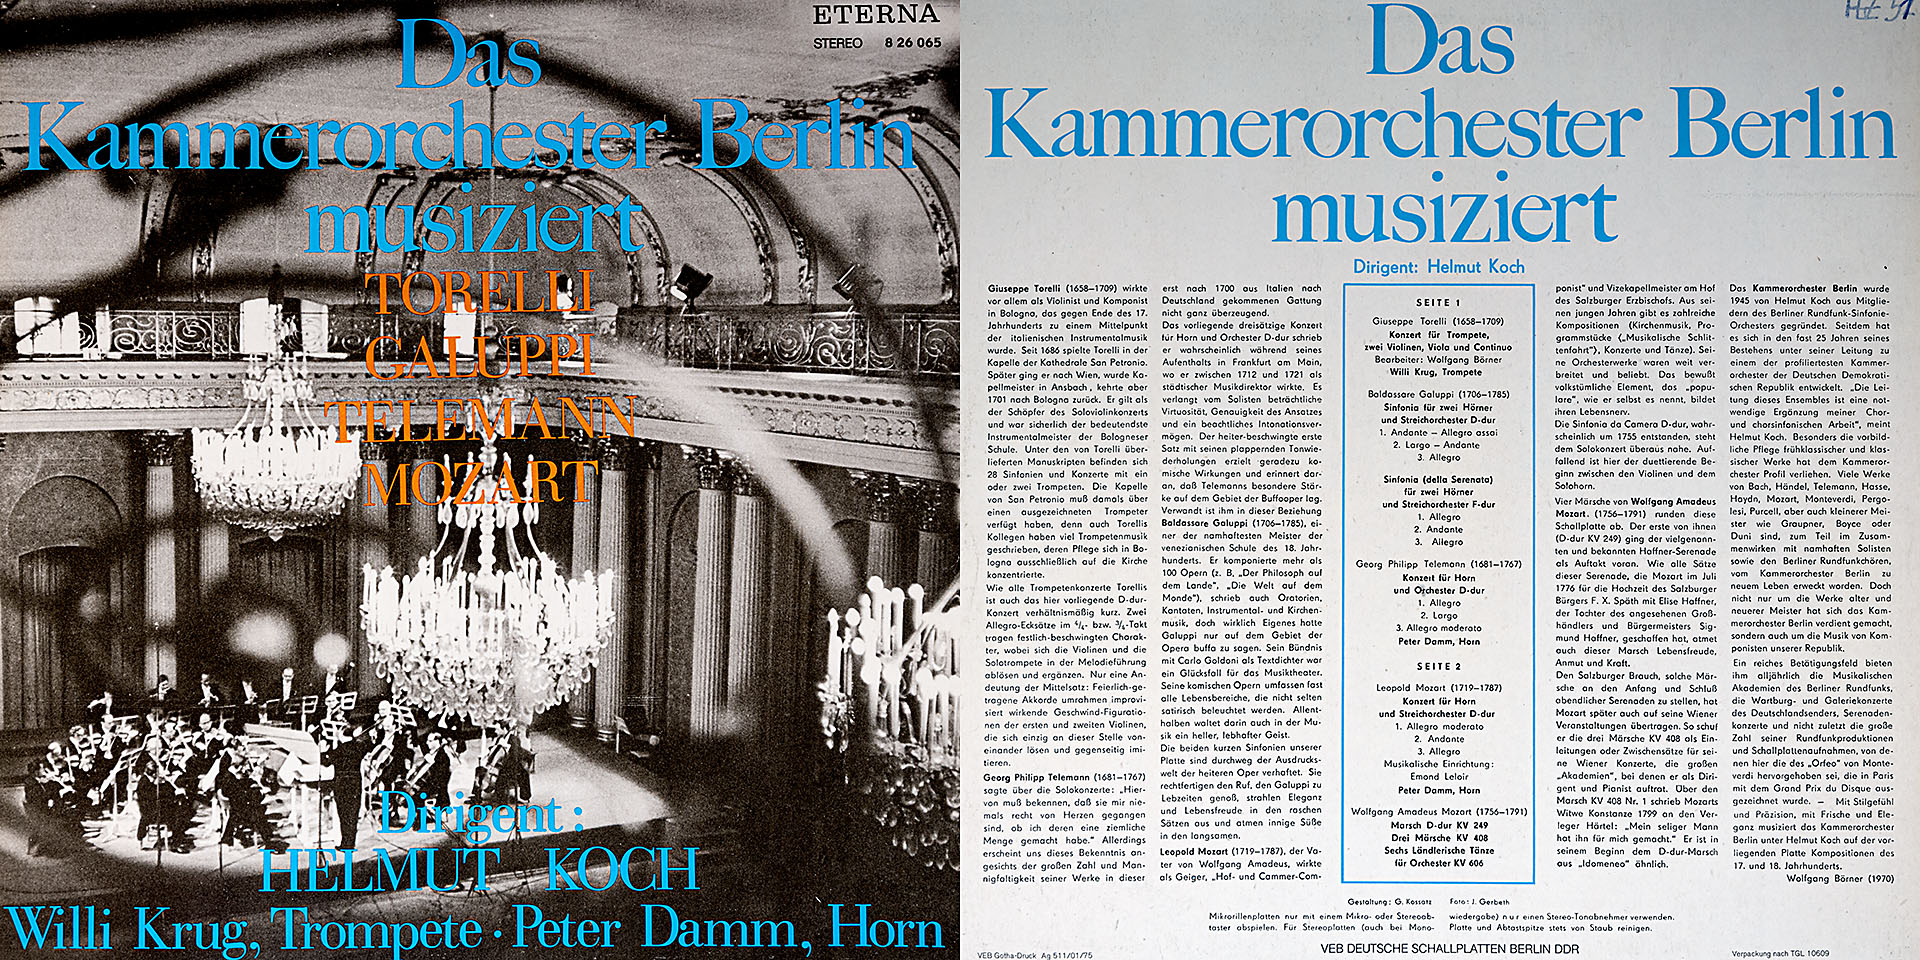 Das Kammerorchester Berlin musiziert - Kammerorchester Berlin, Dirigent  Willi Krug